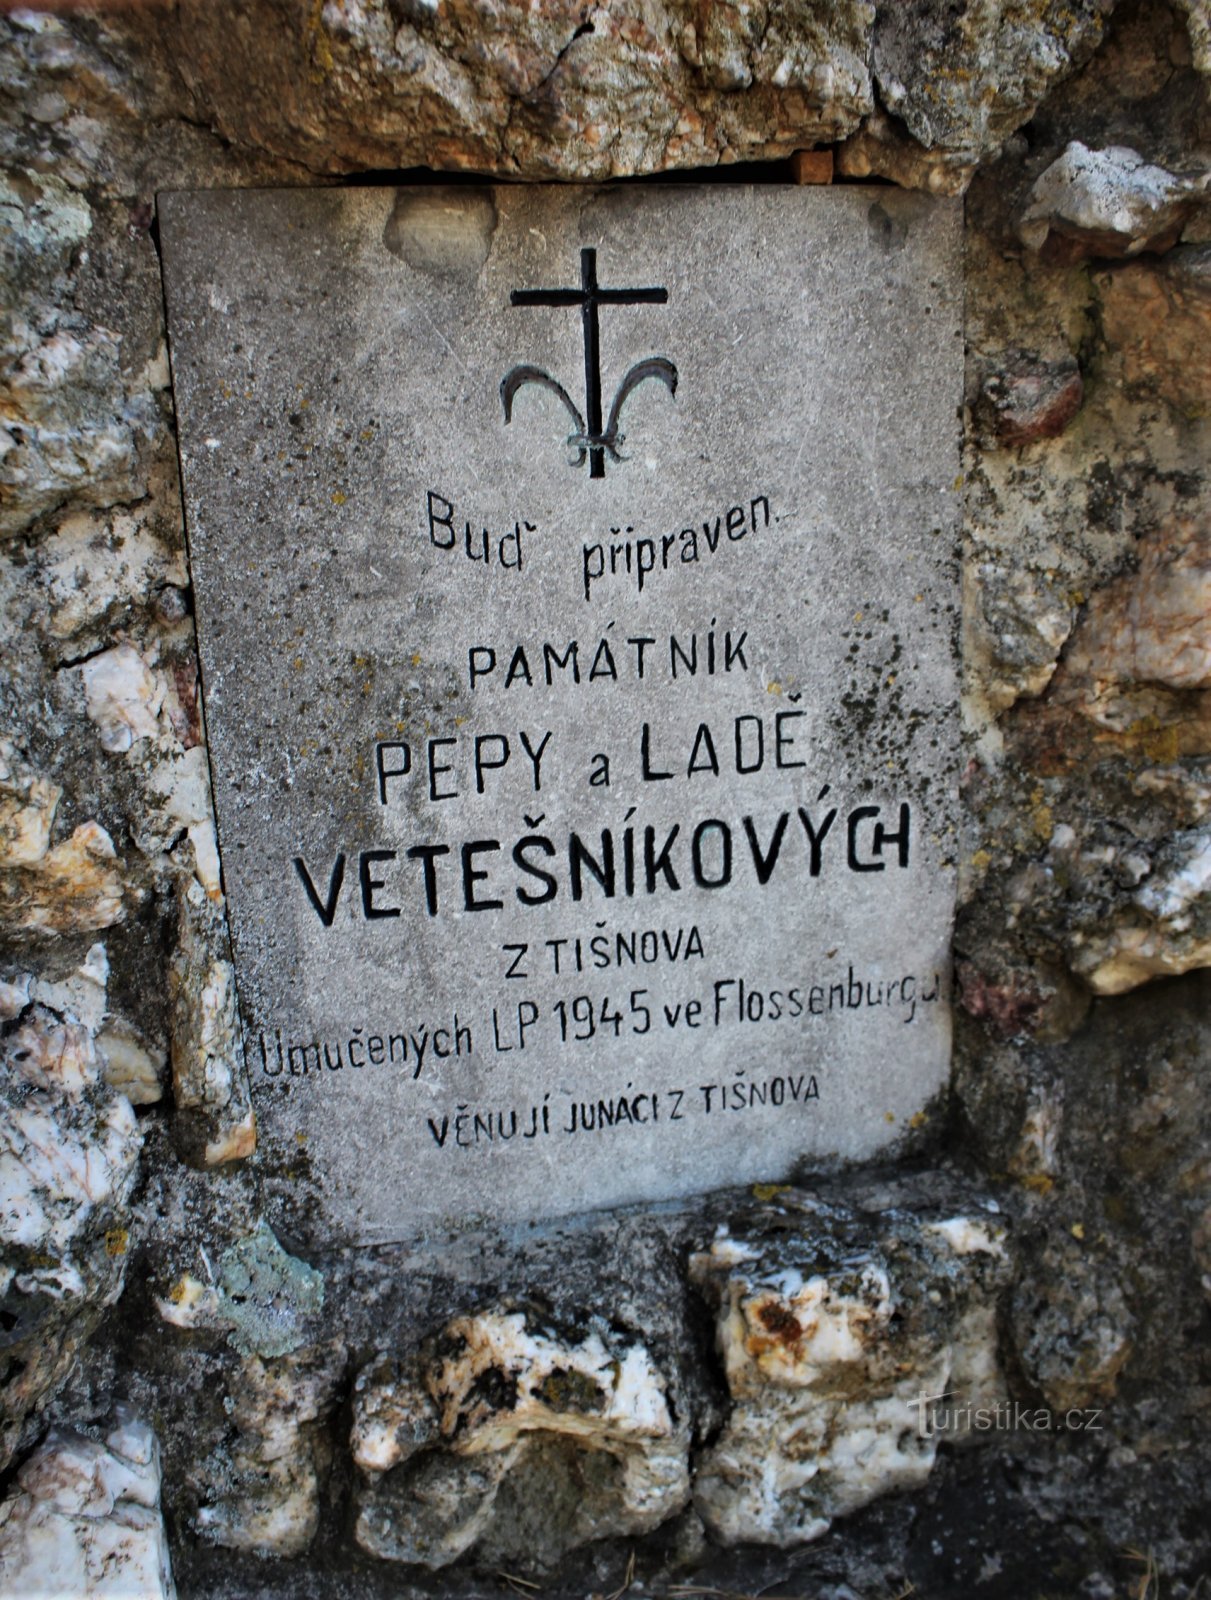 Commemorative plaque on the monument